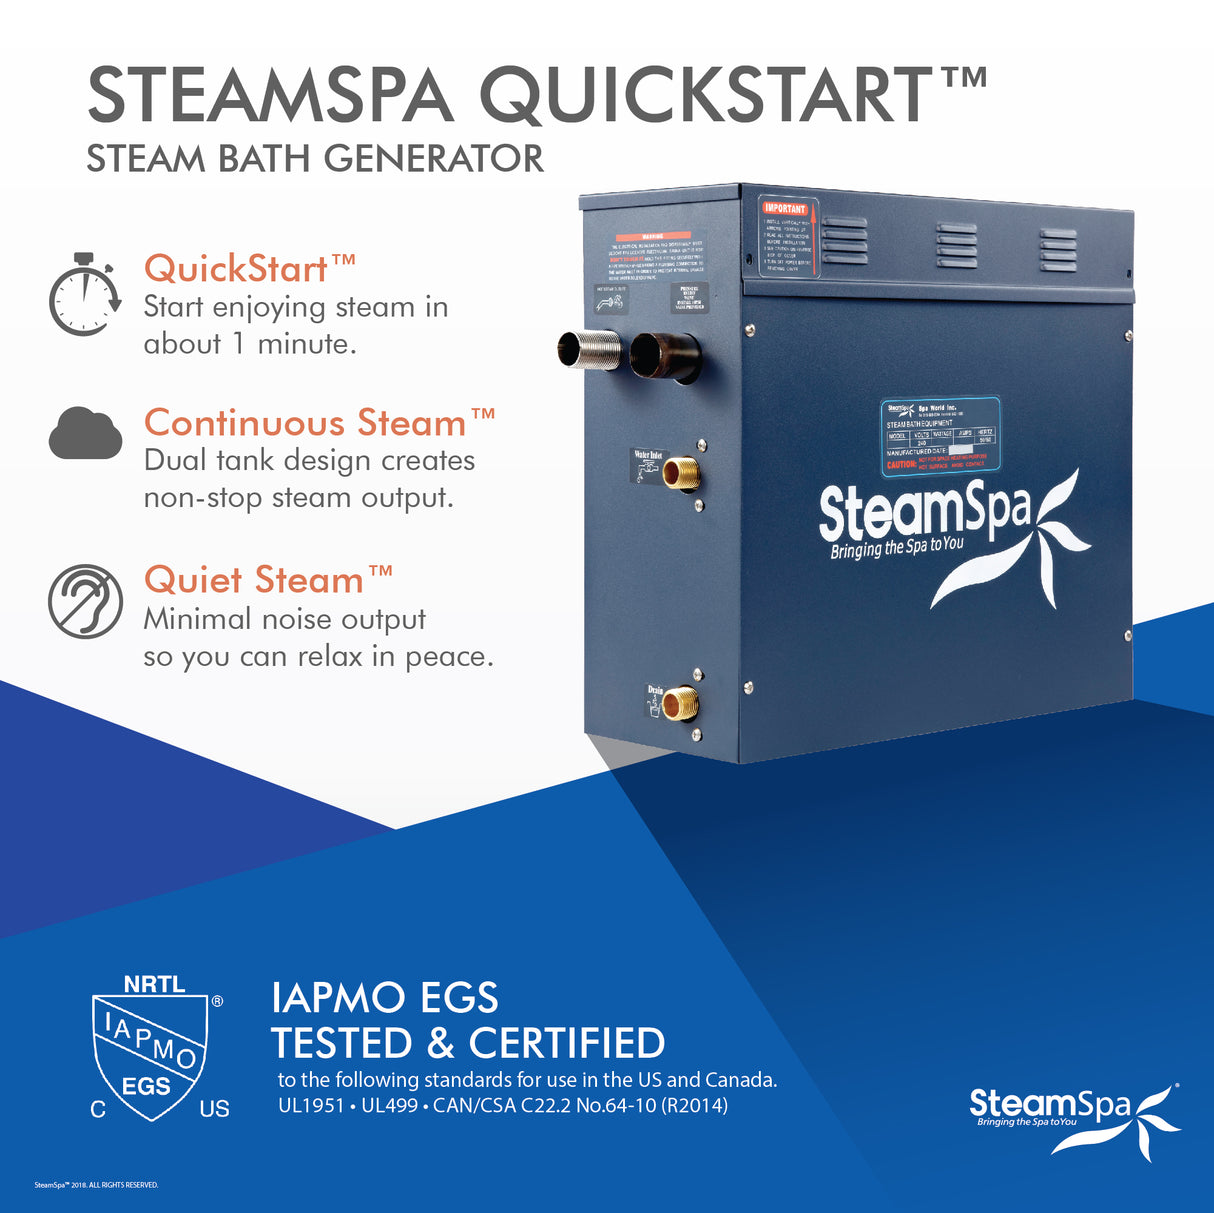 SteamSpa Premium 7.5 KW QuickStart Acu-Steam Bath Generator Package with Built-in Auto Drain in Gold PRR750GD-A